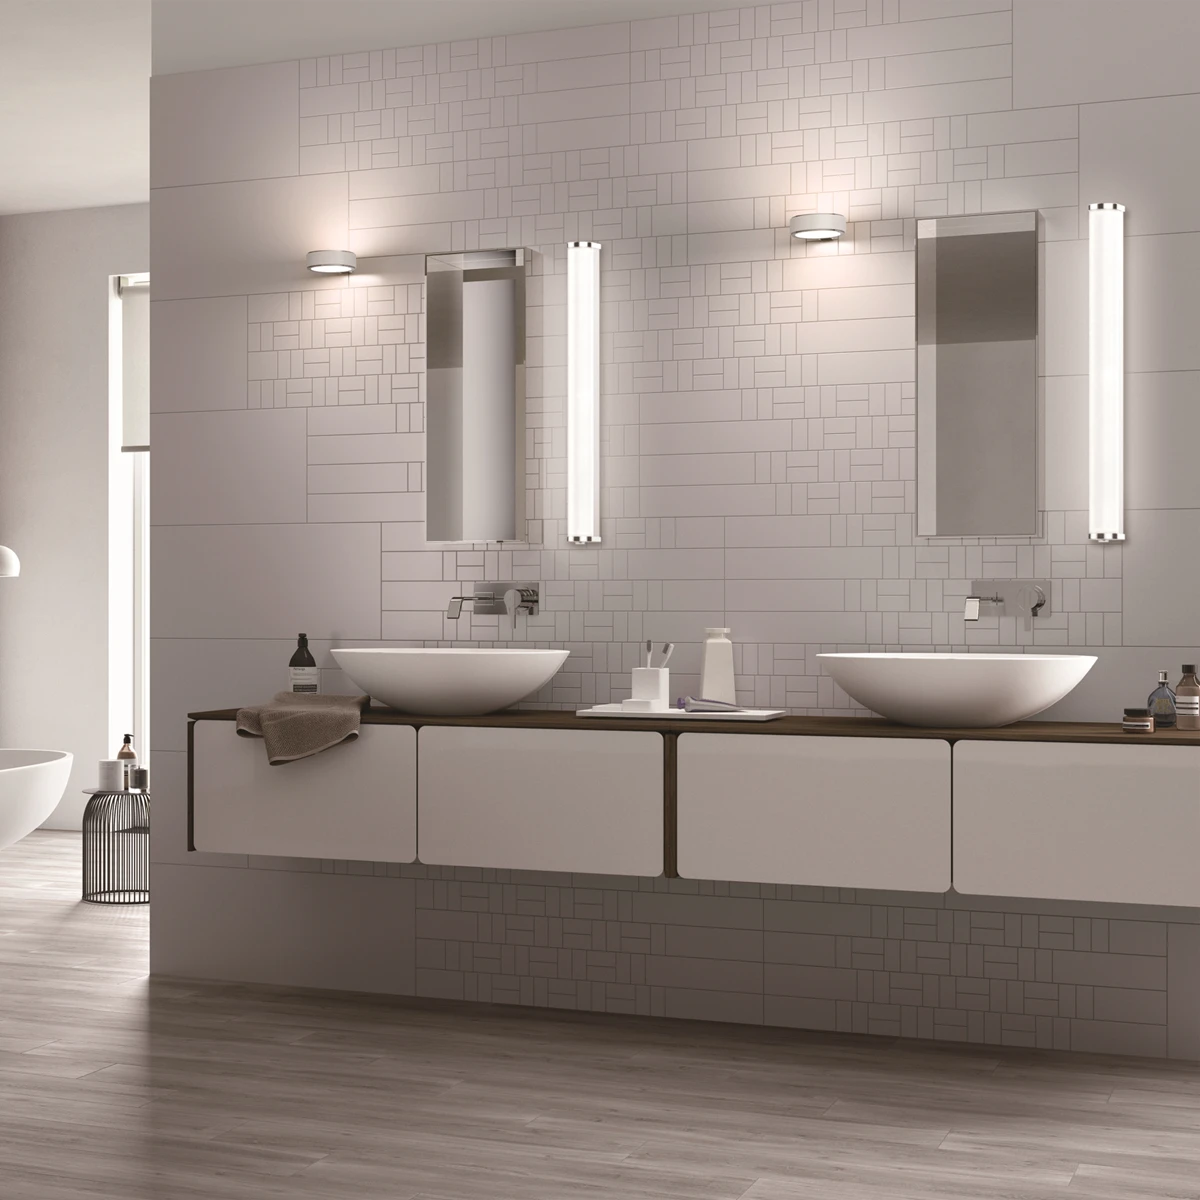 
modern bathroom vanity lamp LED mirror crystal front vanity light bar 